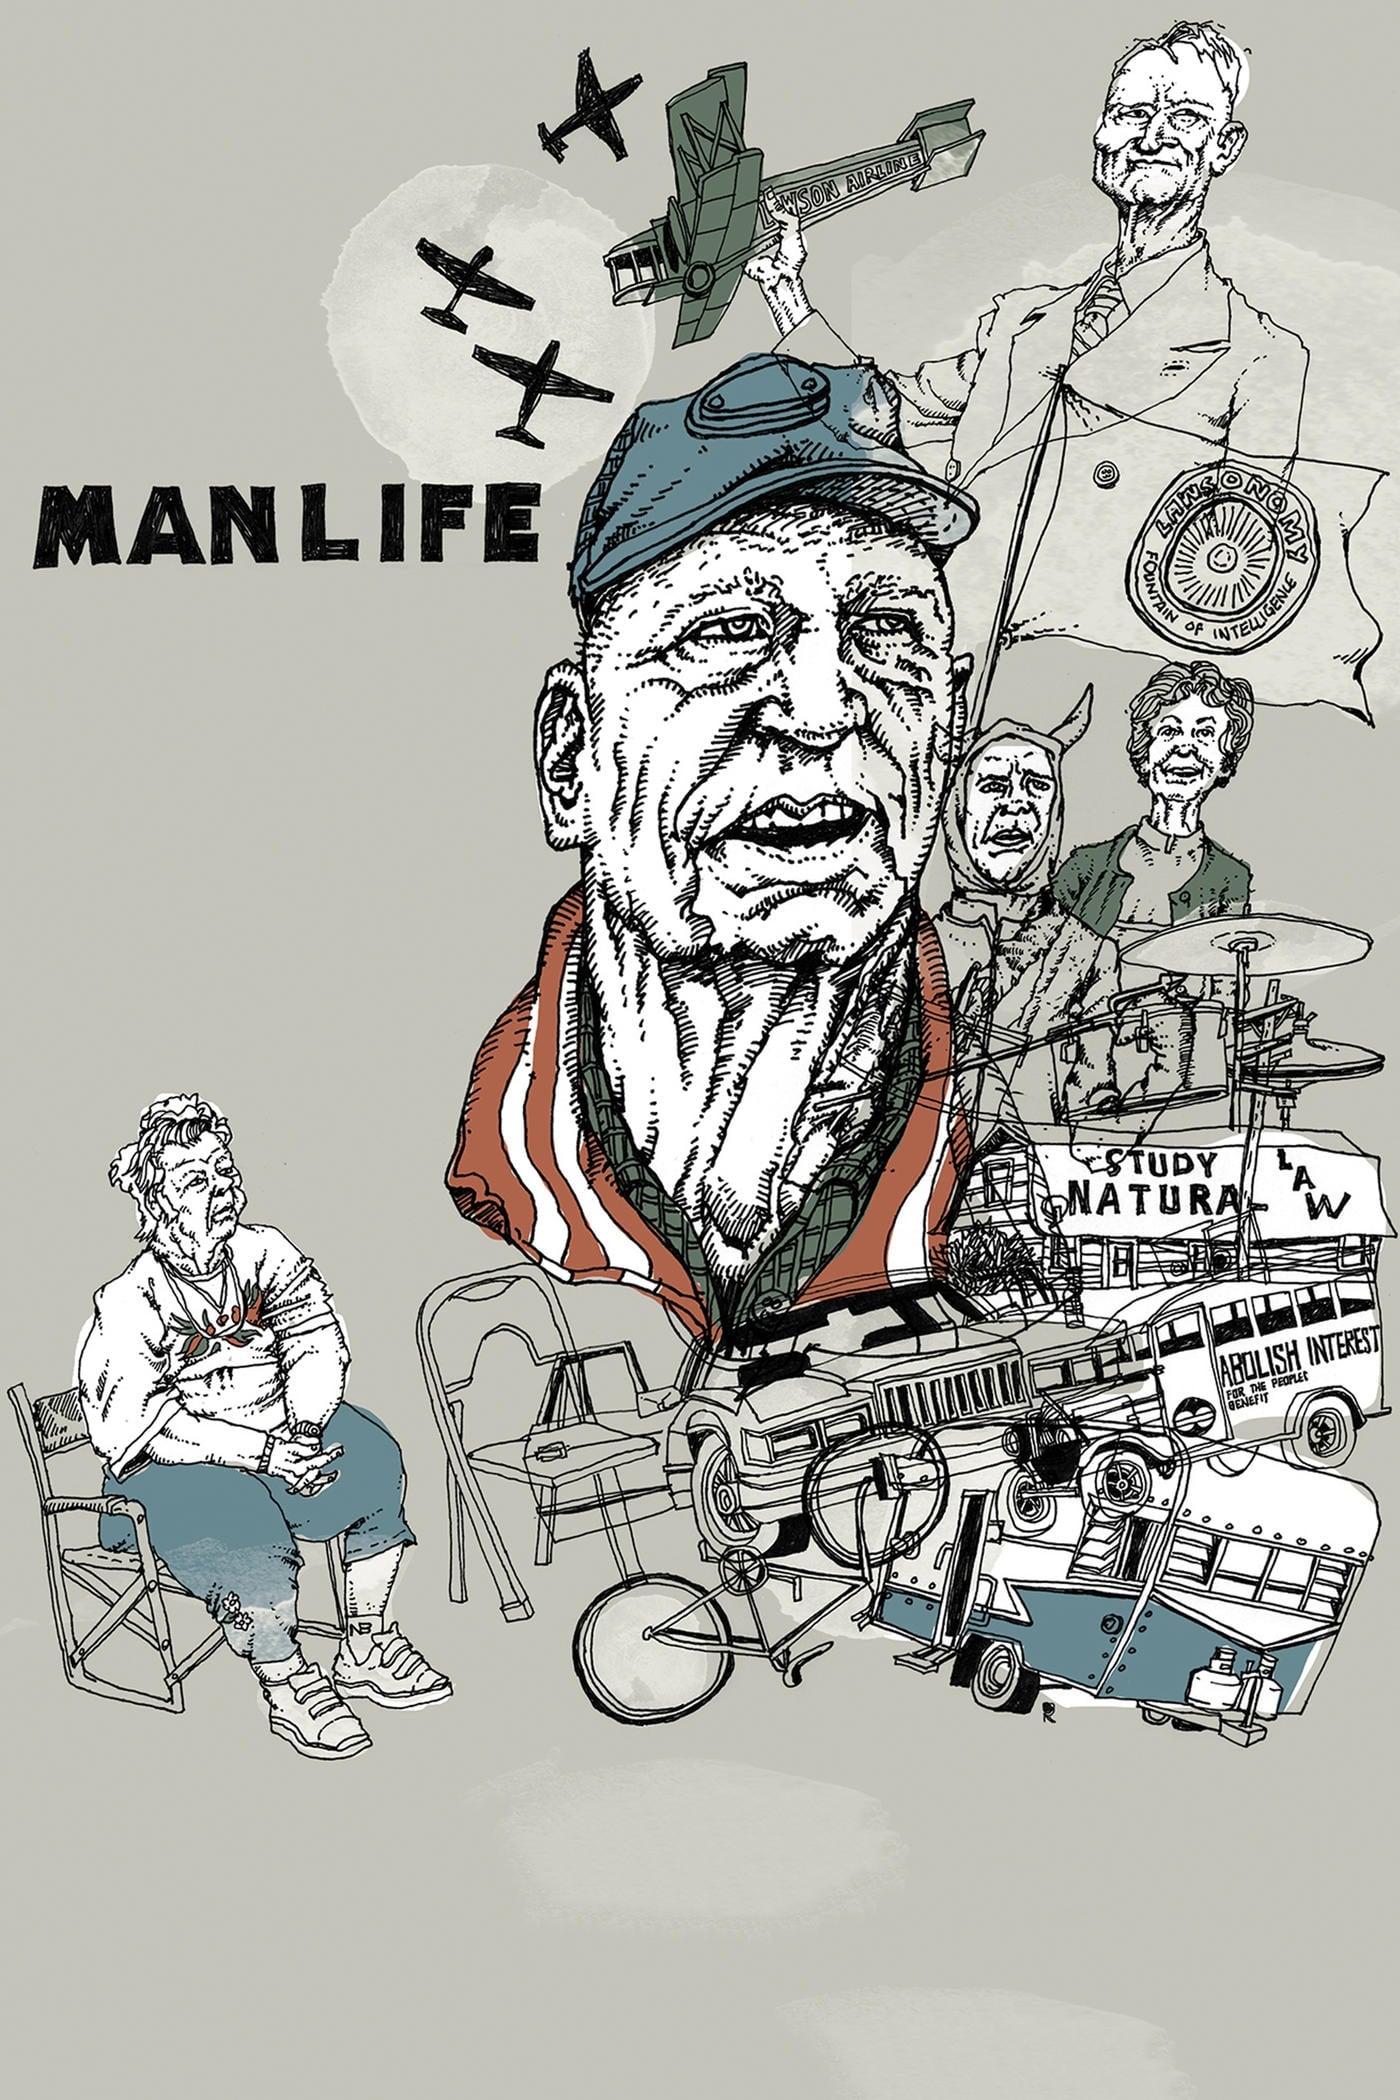 Manlife film